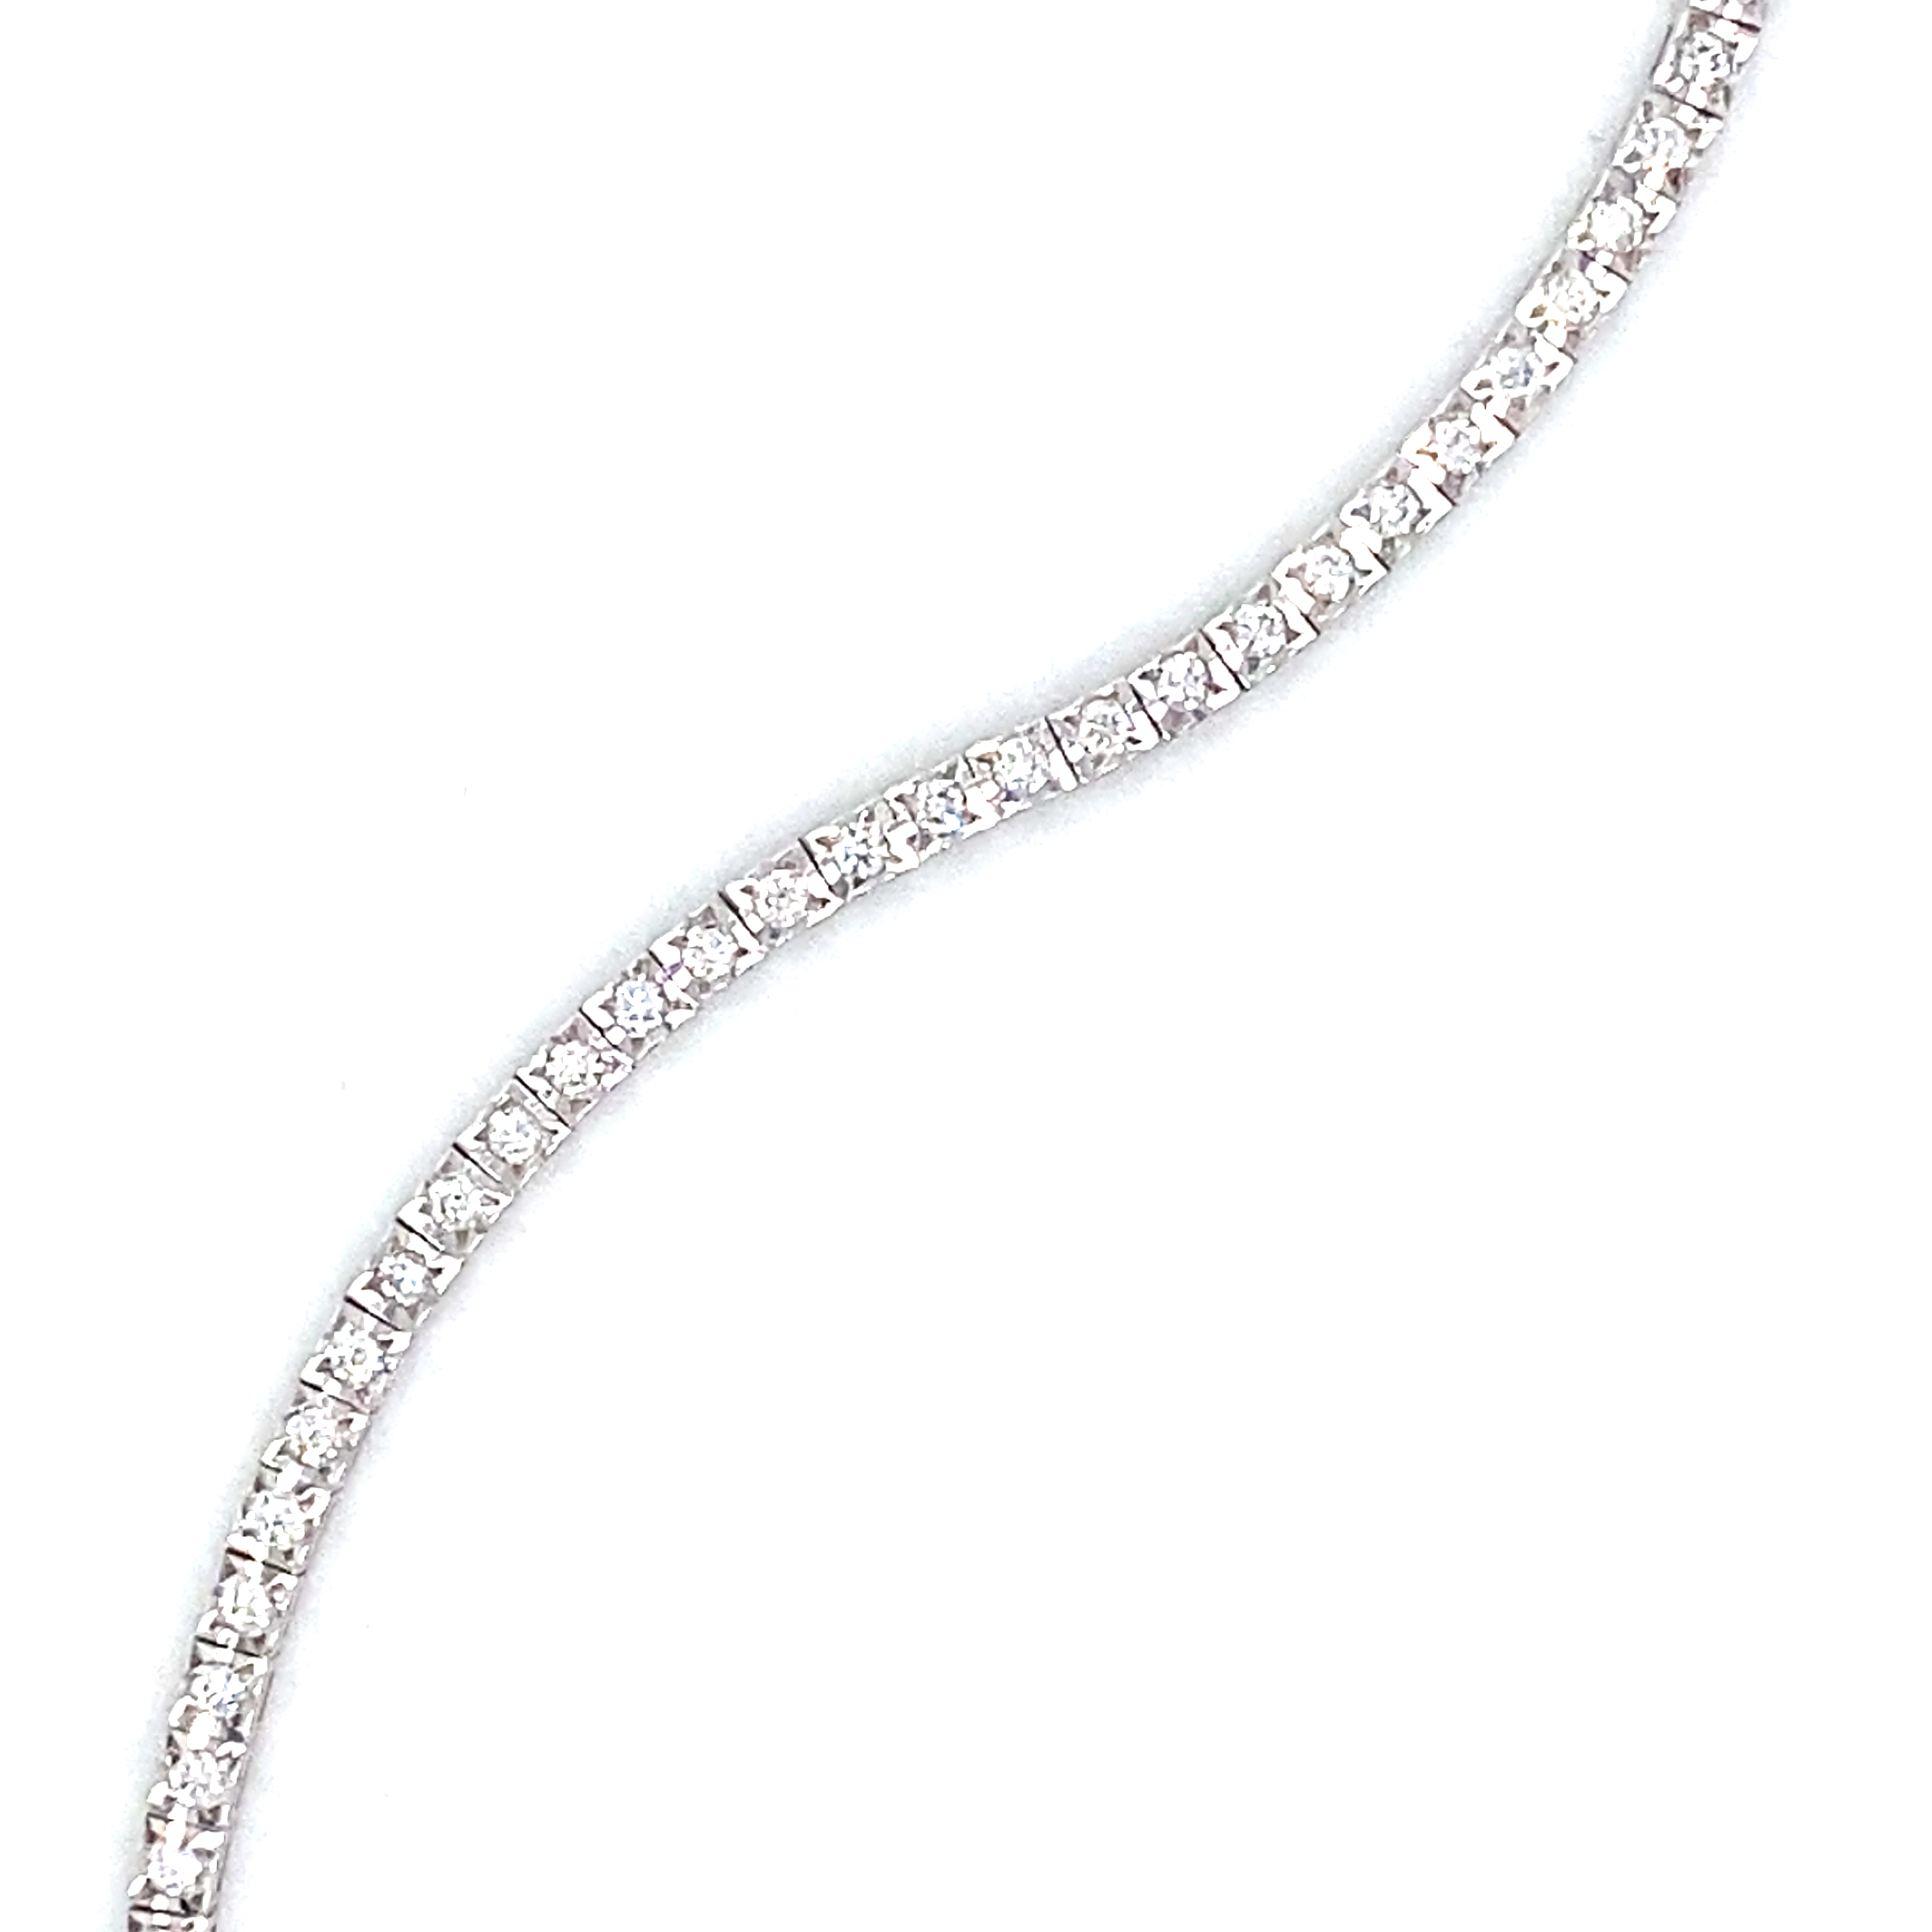 18 Carat White Gold and Diamond Line Bracelet 0.75 Carats